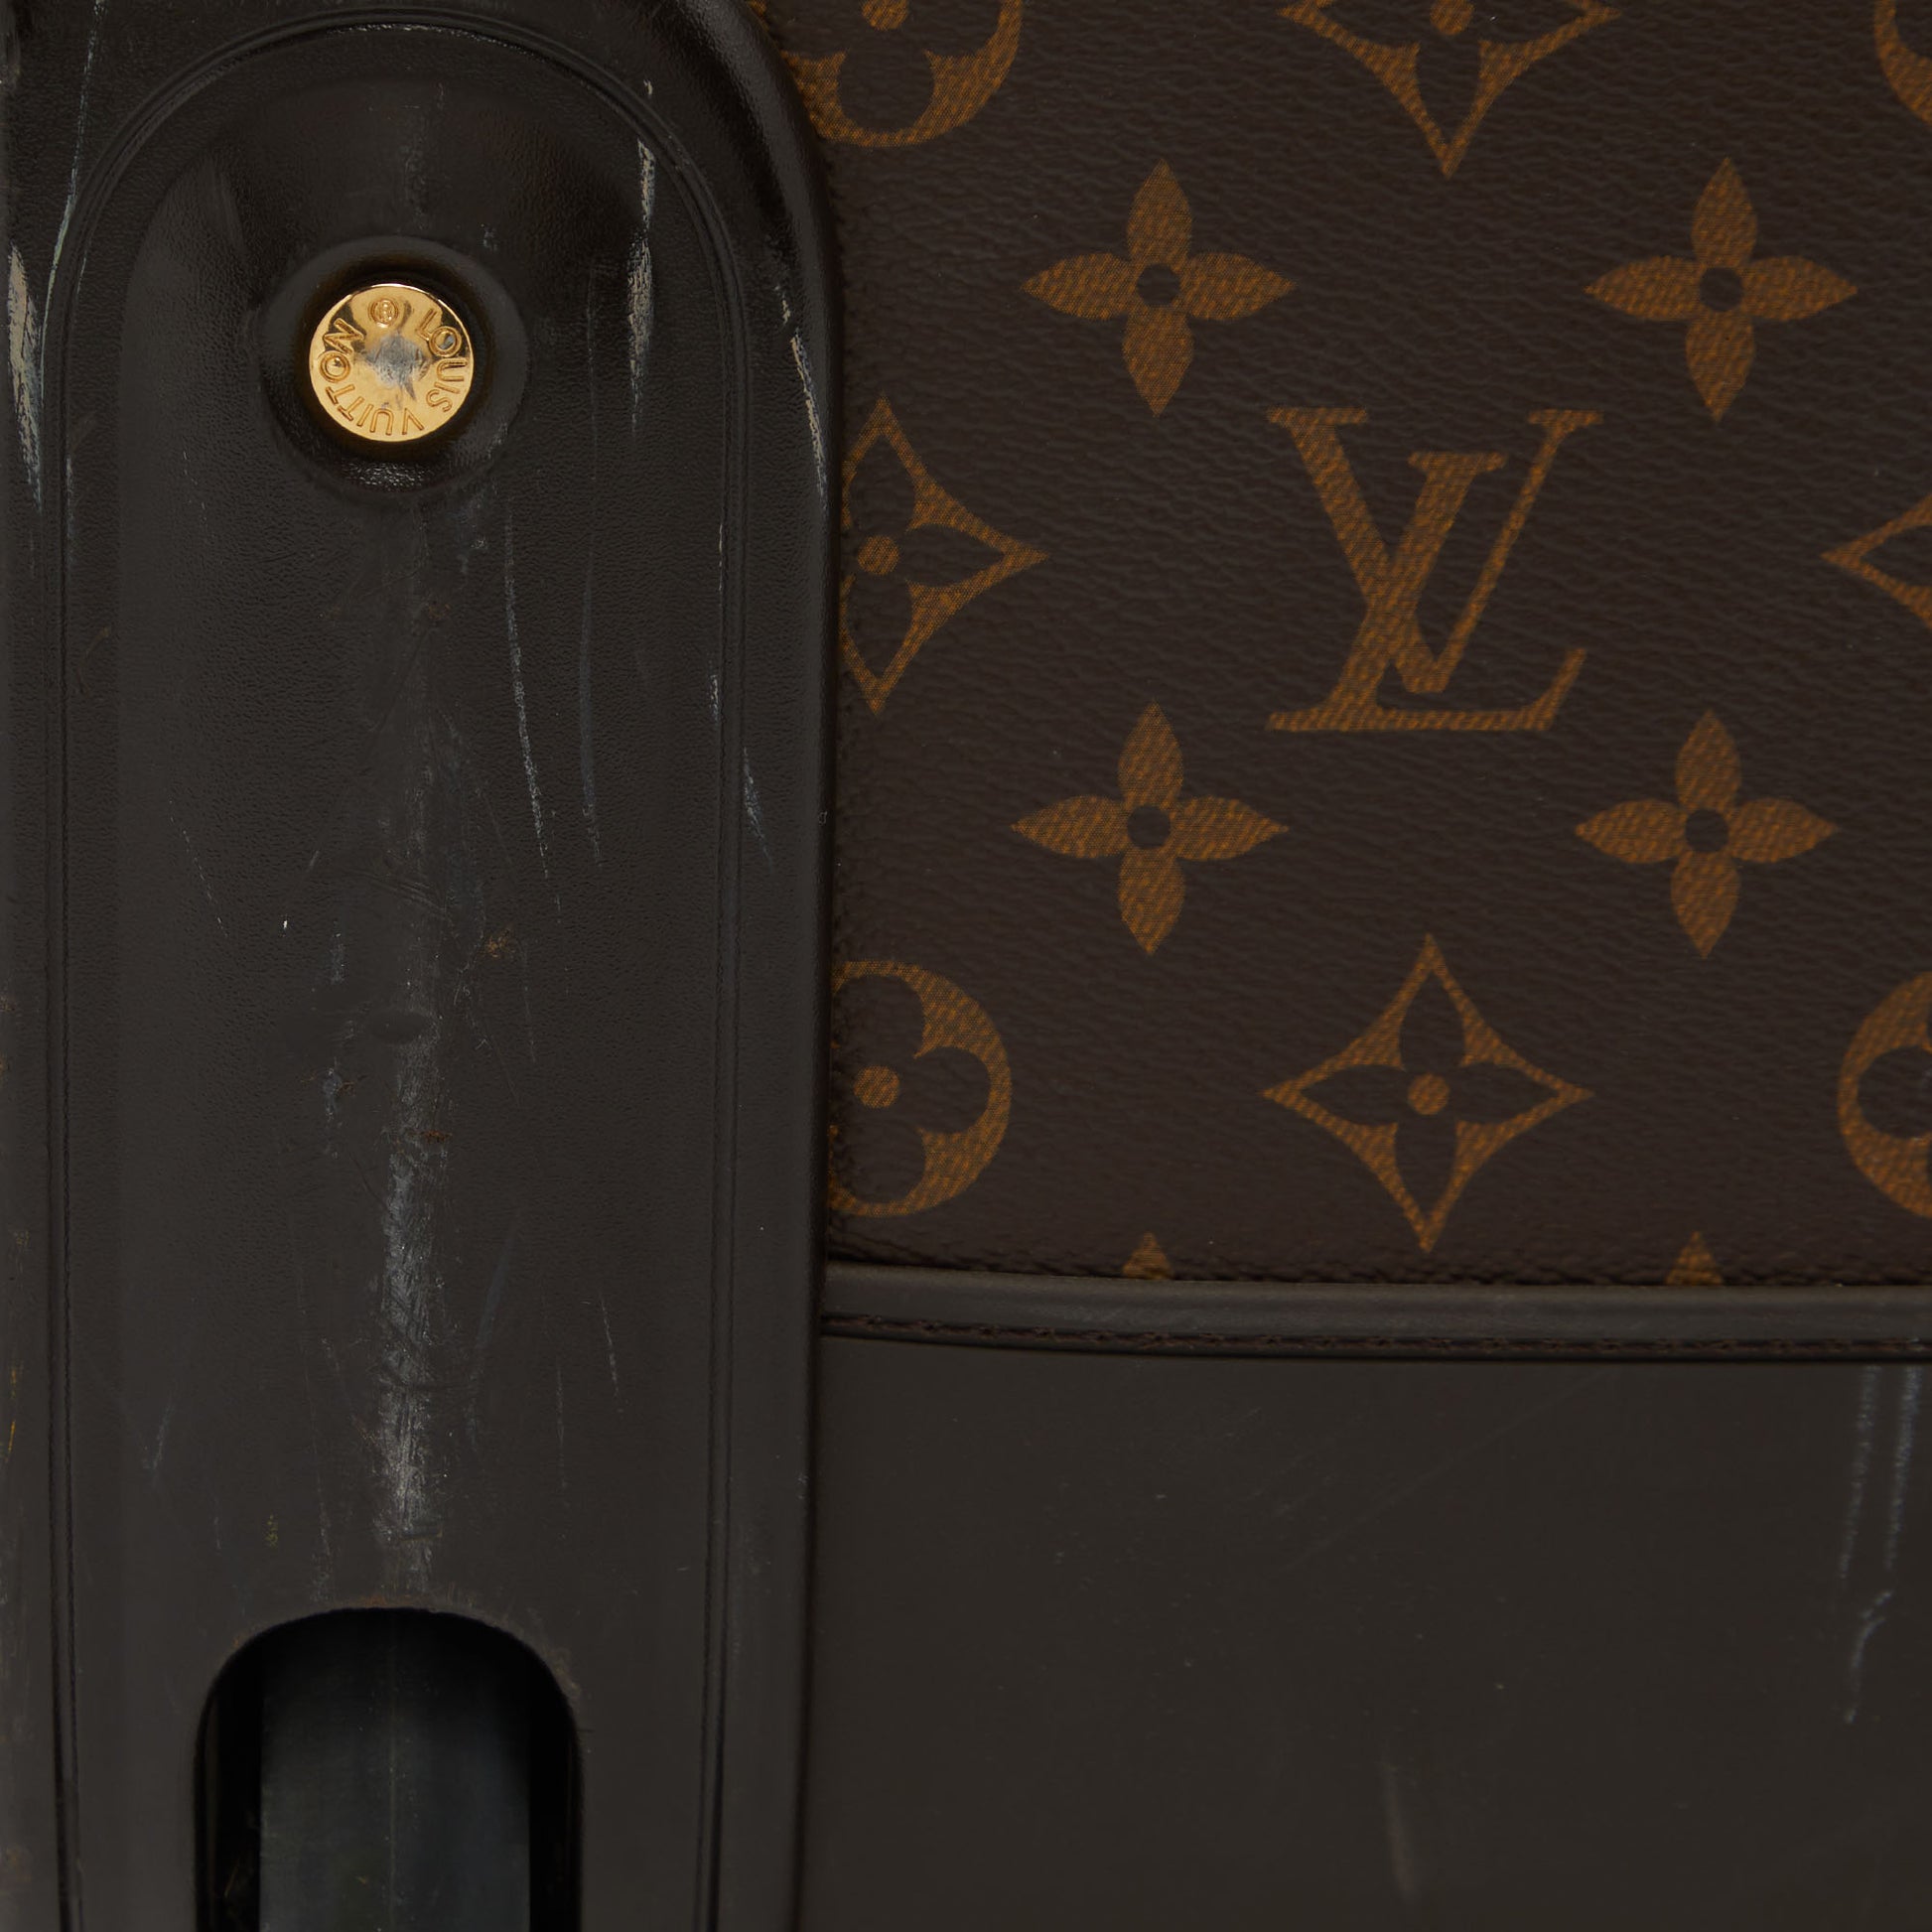 Louis Vuitton Monogram Canvas Pegase Legere 55 Luggage Louis